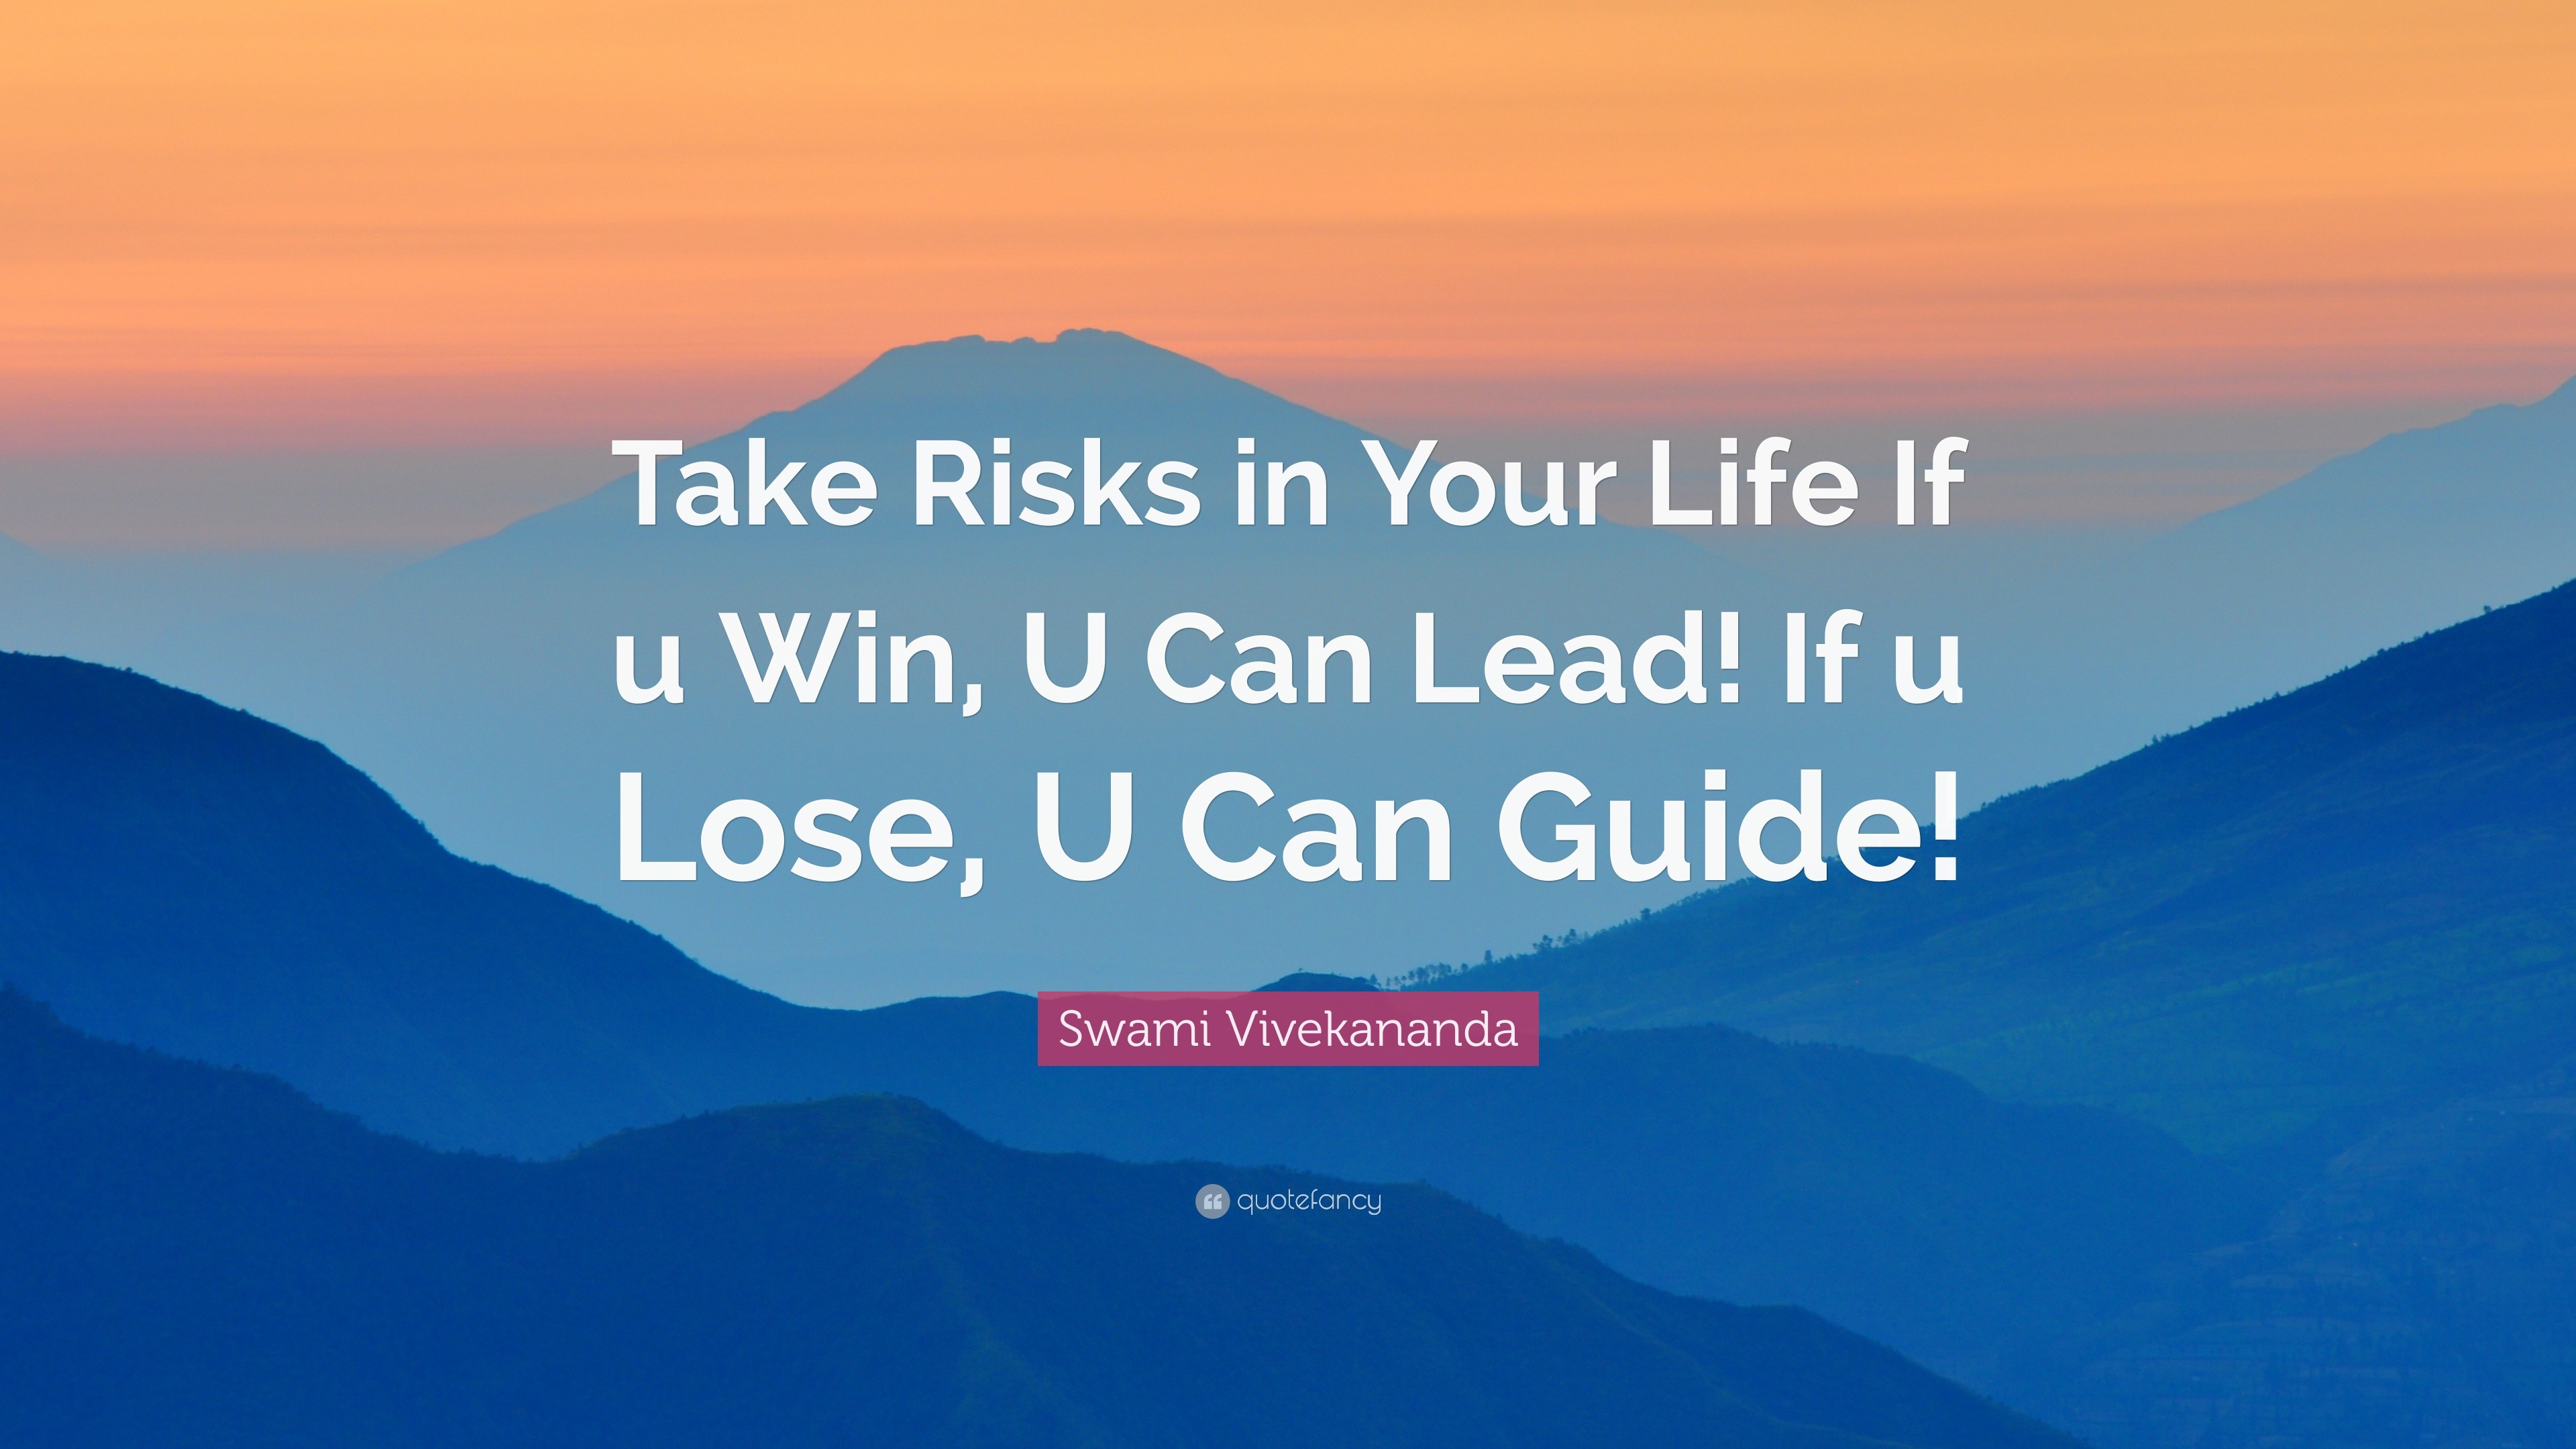 Swami Vivekananda Quote “Take Risks in Your Life If u Win